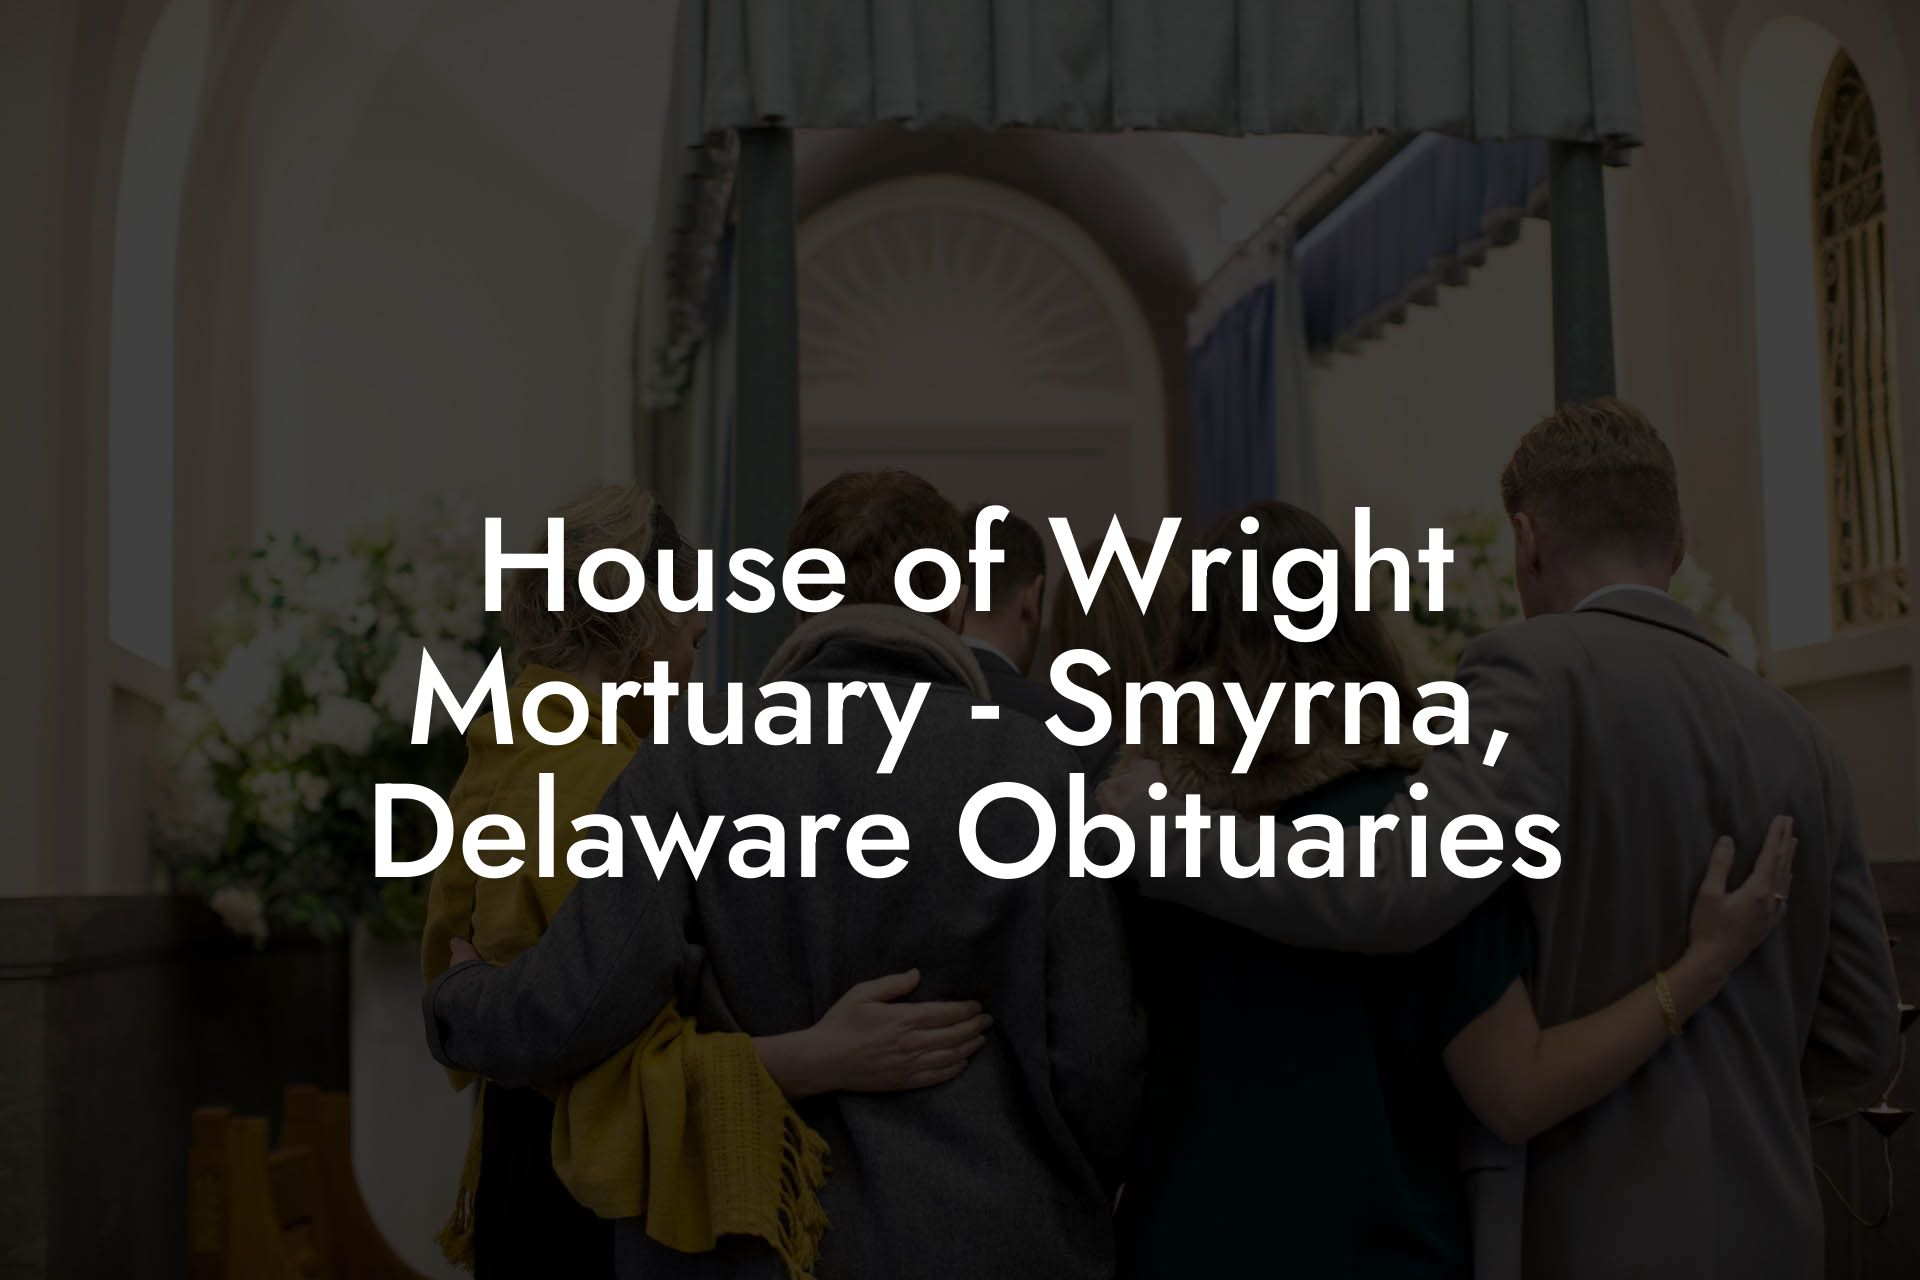 House of Wright Mortuary - Smyrna, Delaware Obituaries